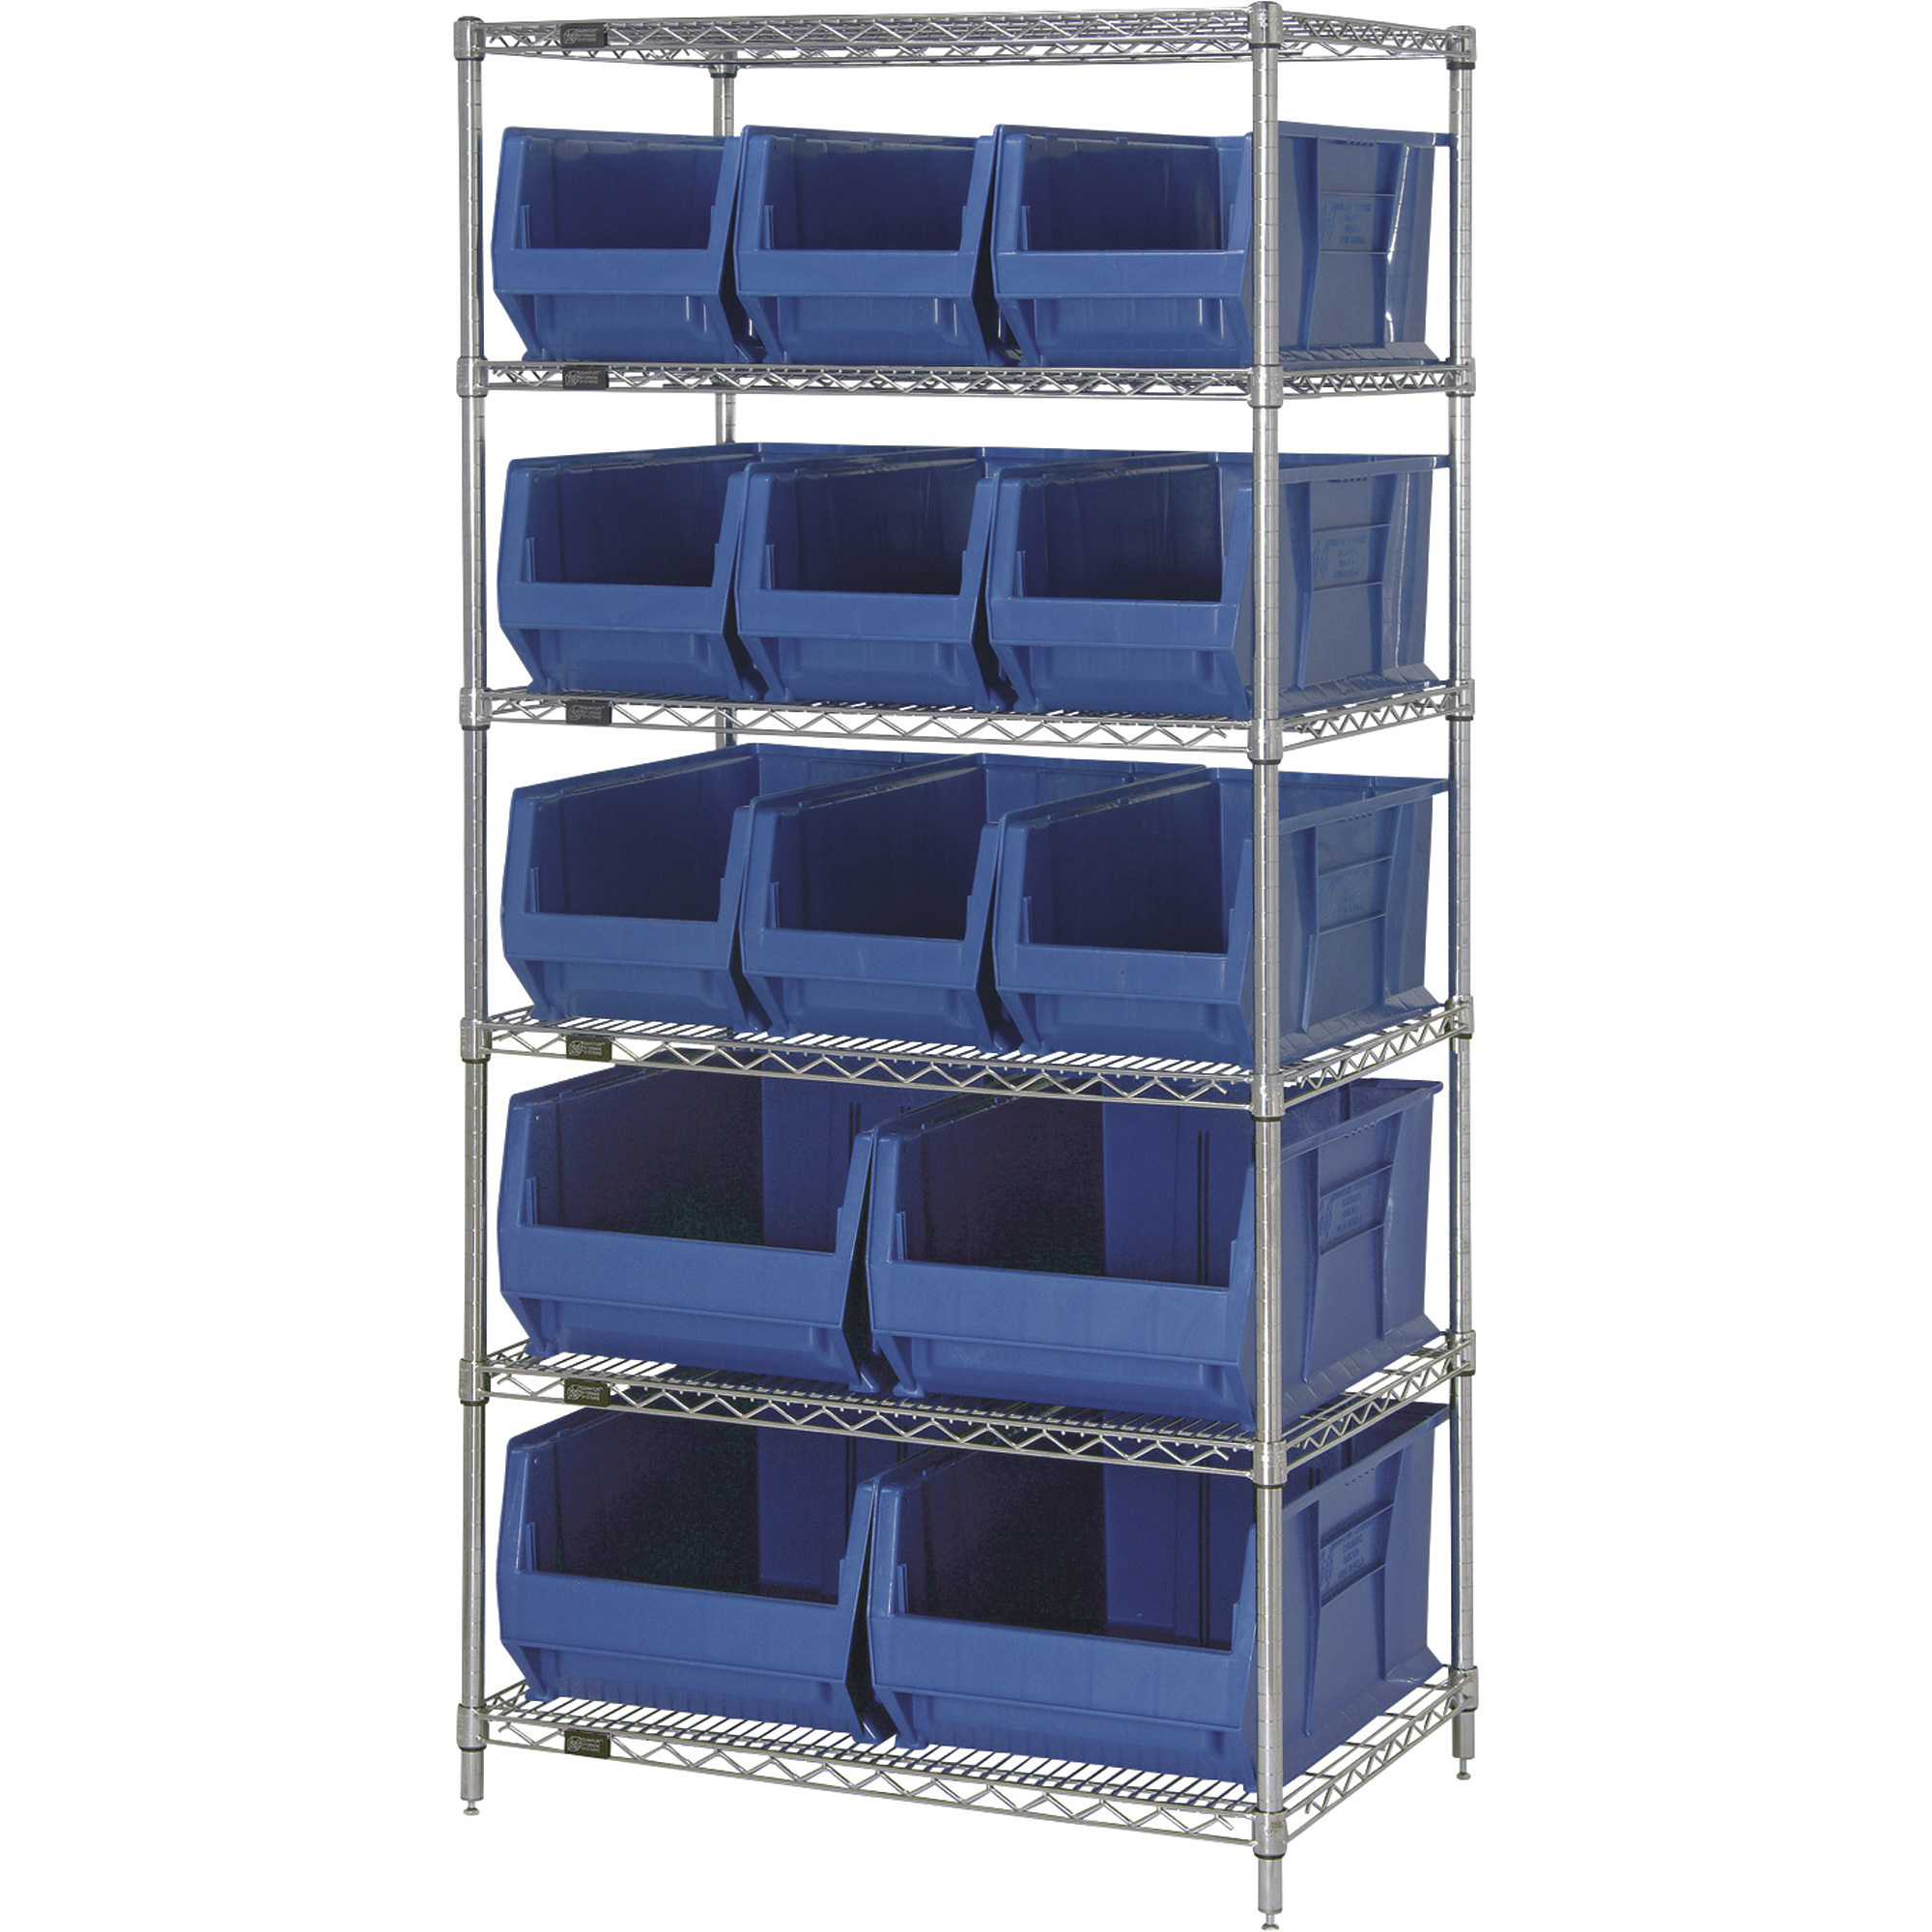 Quantum Storage Single Side Metal Shelving Unit With 13 Assorted Hulk Bins, 30Inch L x 36Inch W x 74Inch H, Blue, Model WR6-973974BL